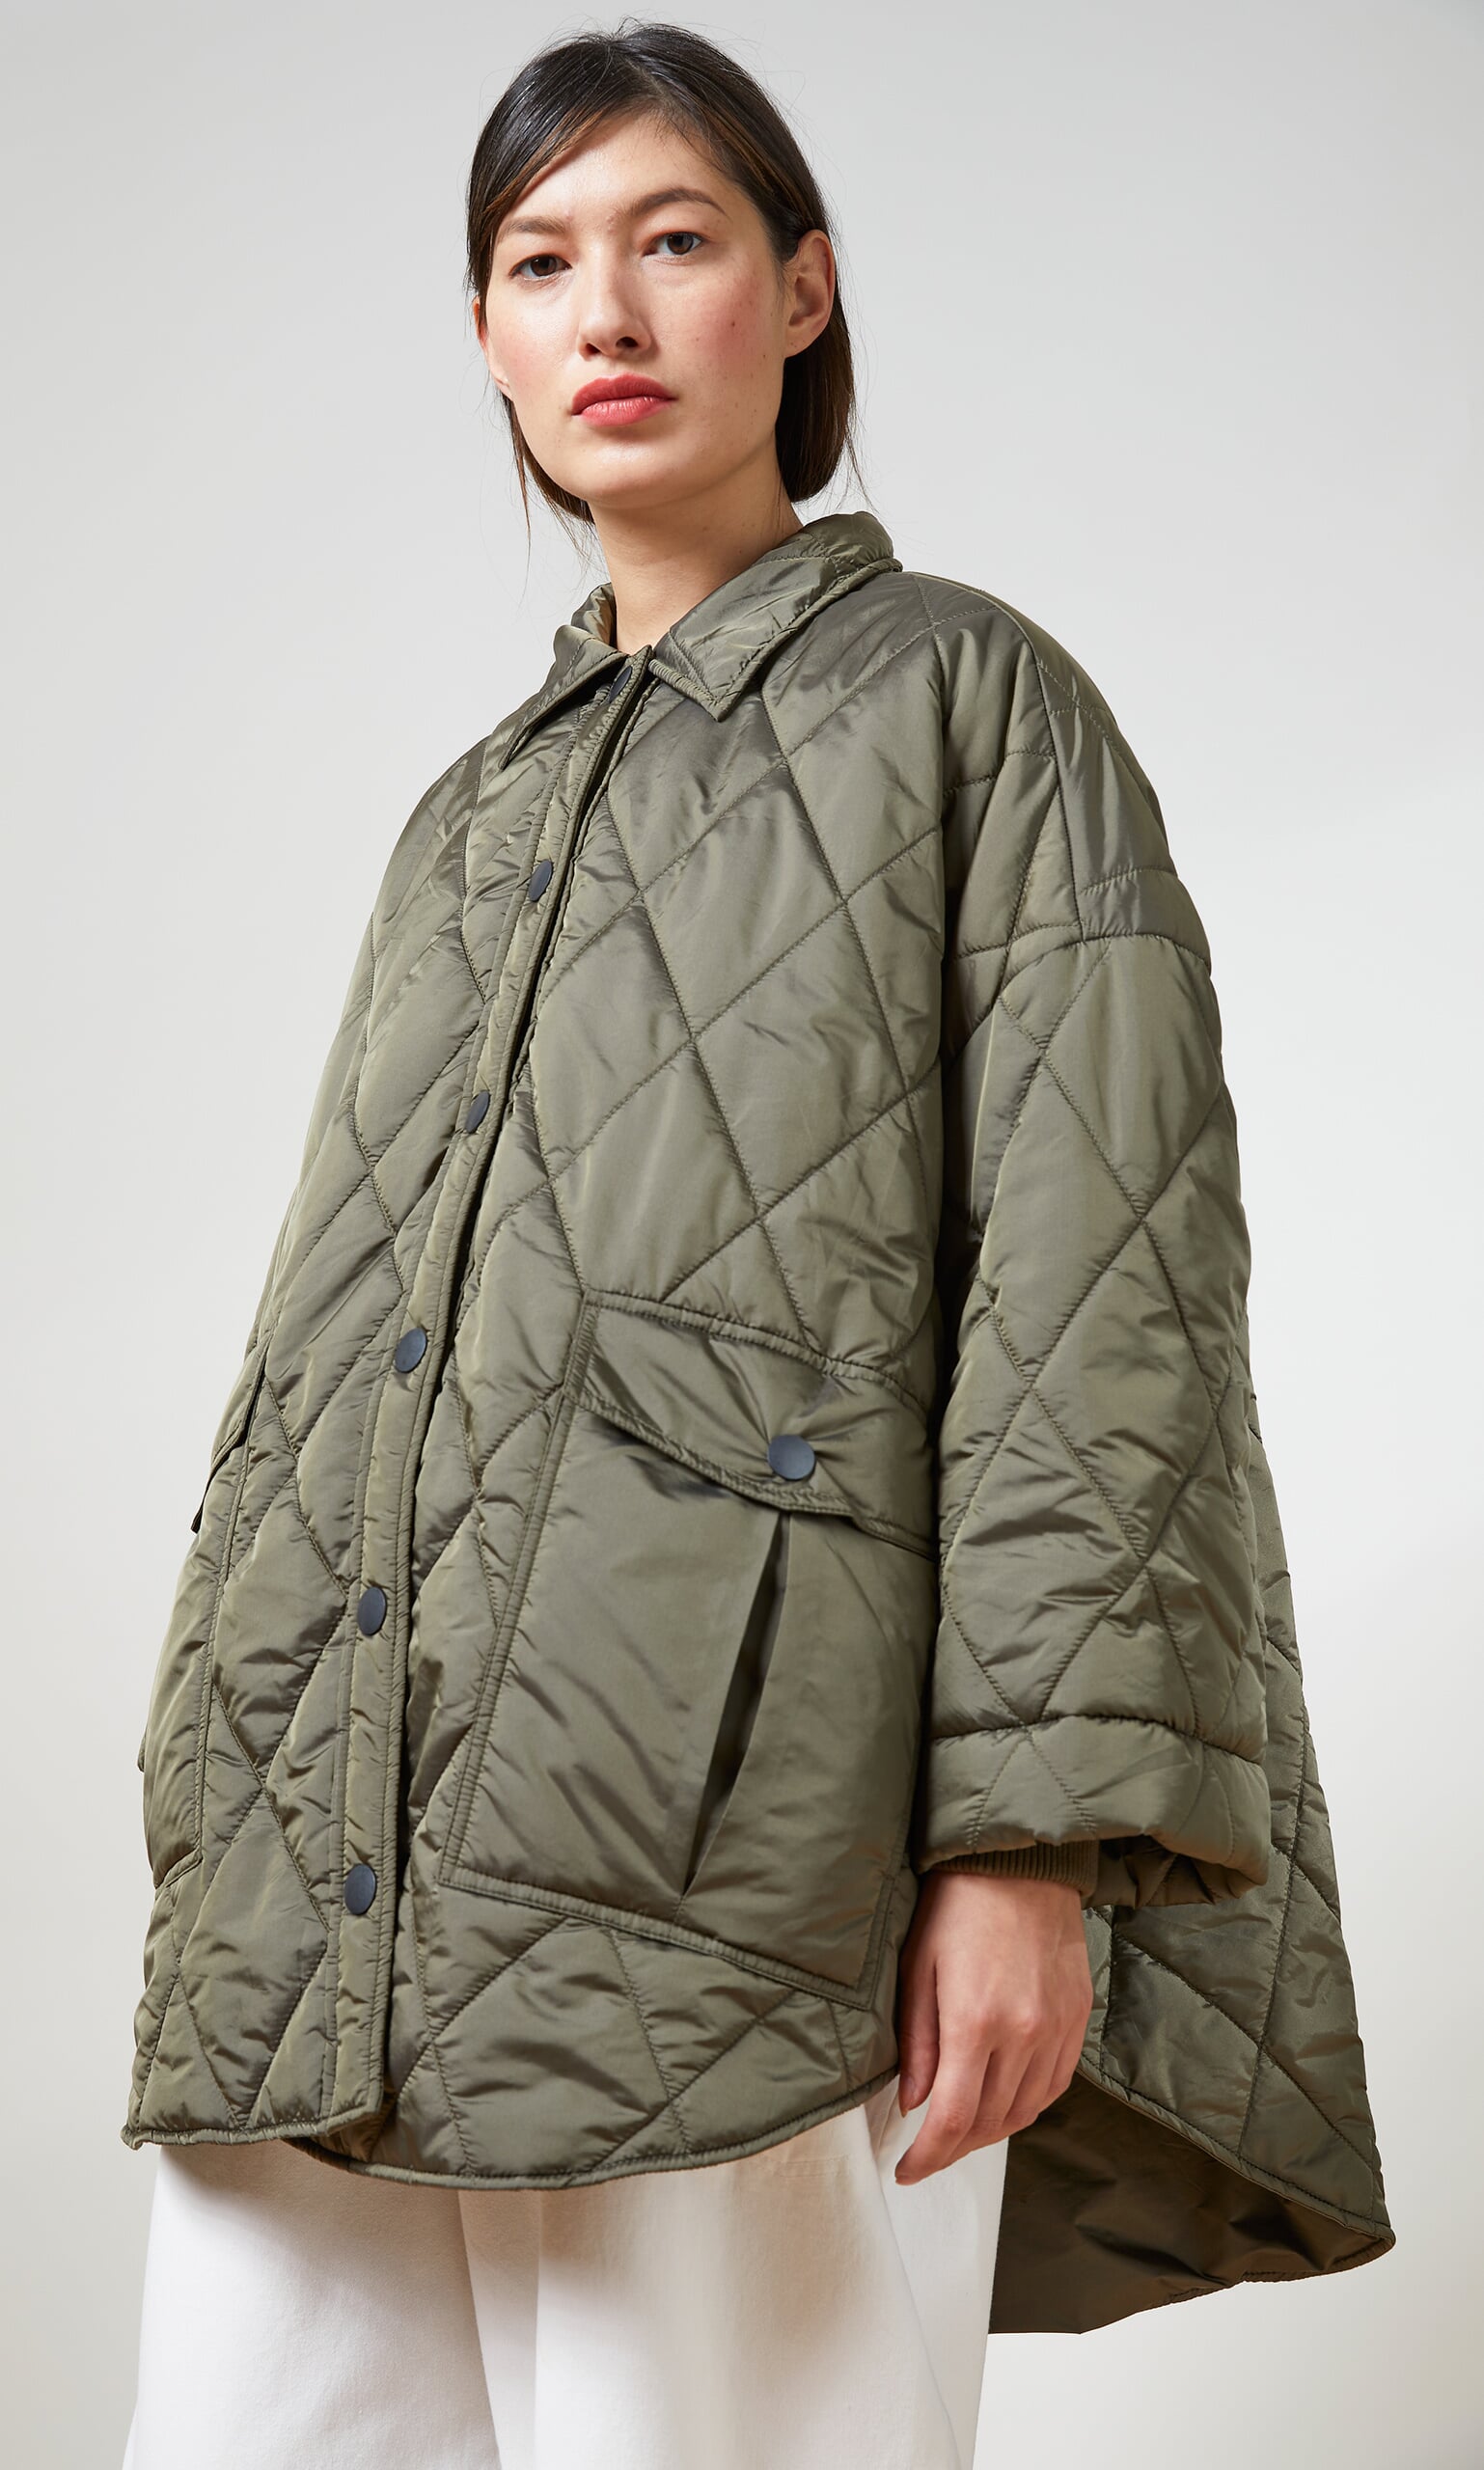 August quilt coat - Plümo Ltd